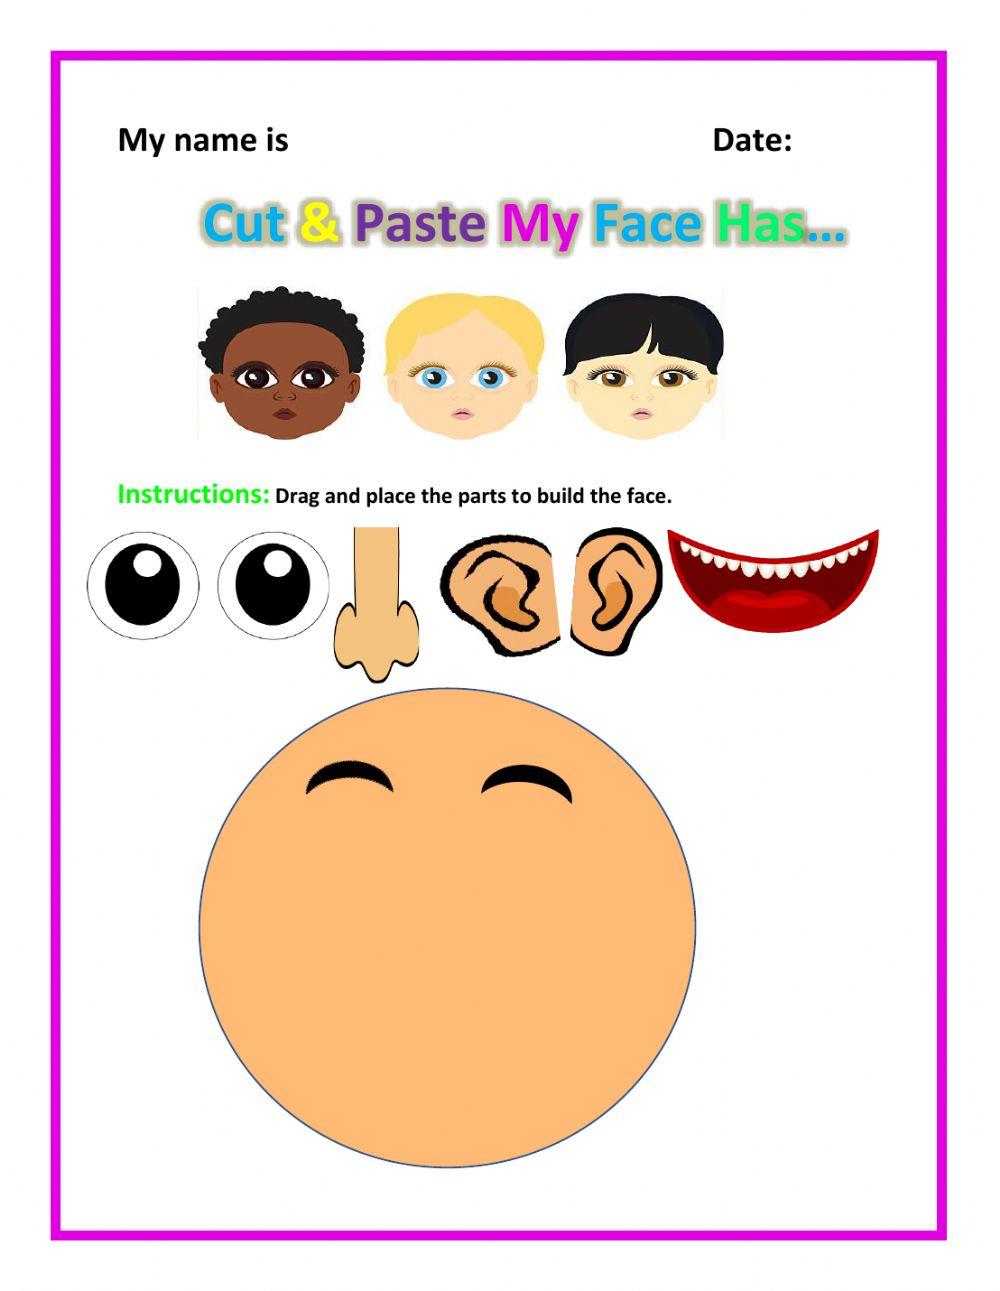 Cut & Paste My Face